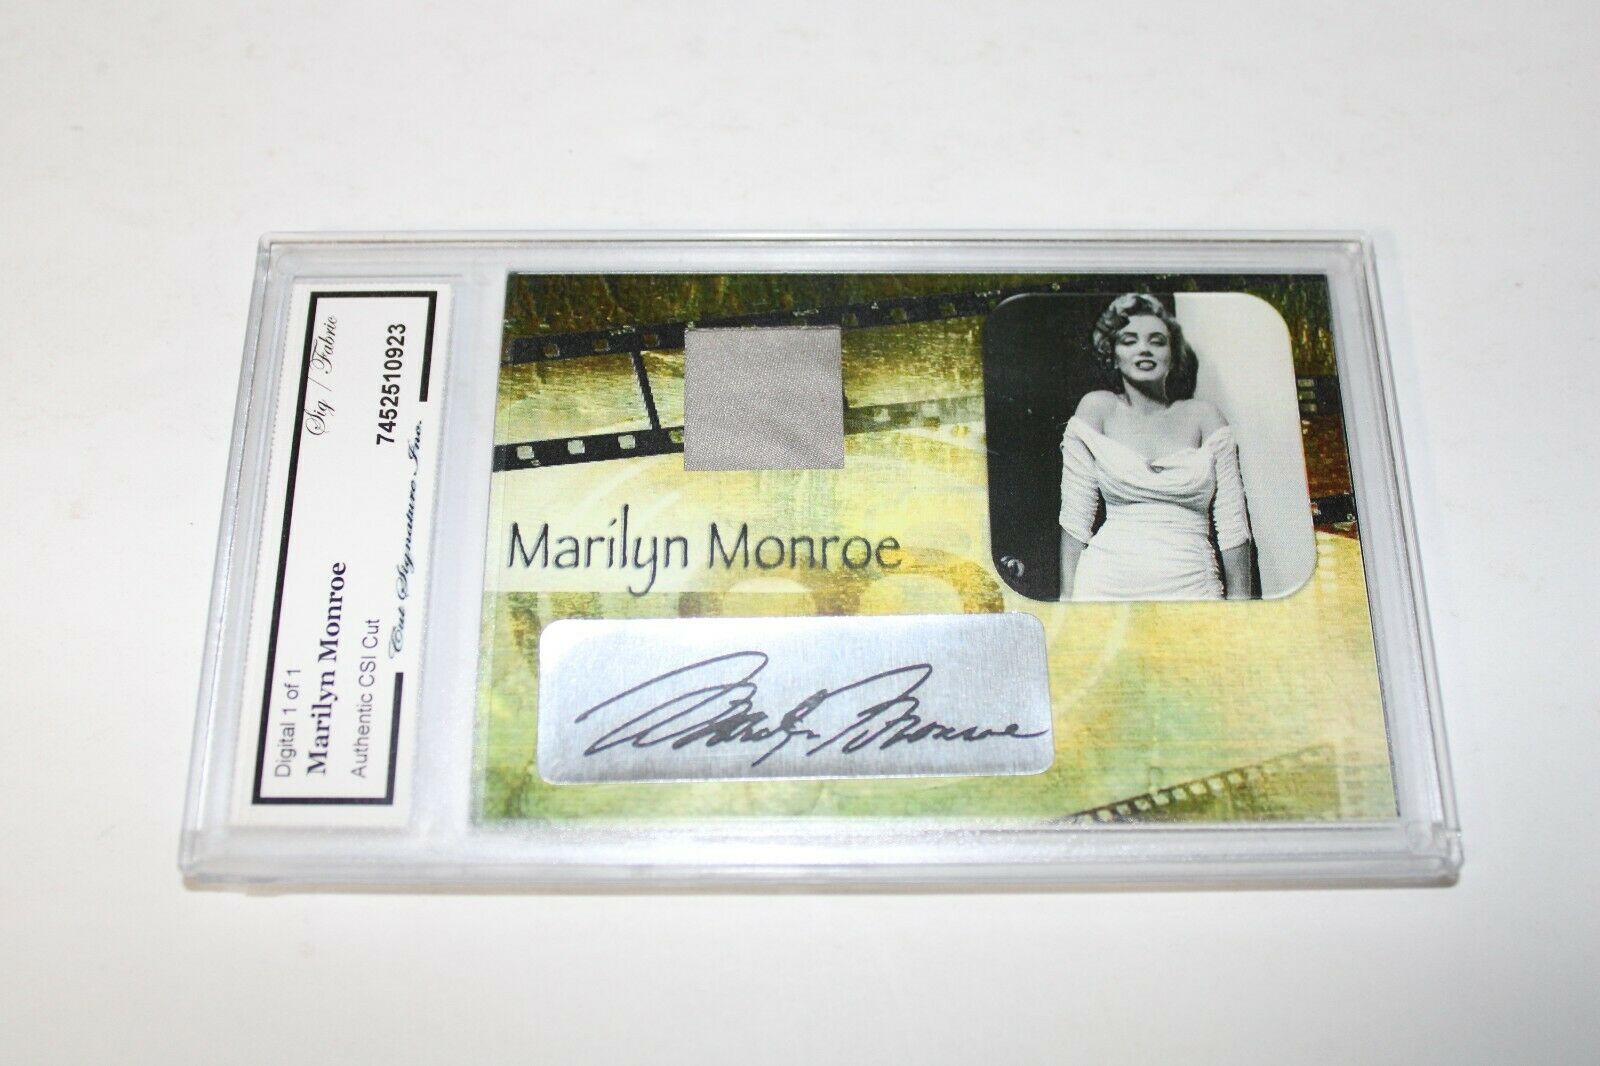 Marilyn Monroe, "authentic Csi Cut" Reprint Autograph, Replica Material Cut 1/1